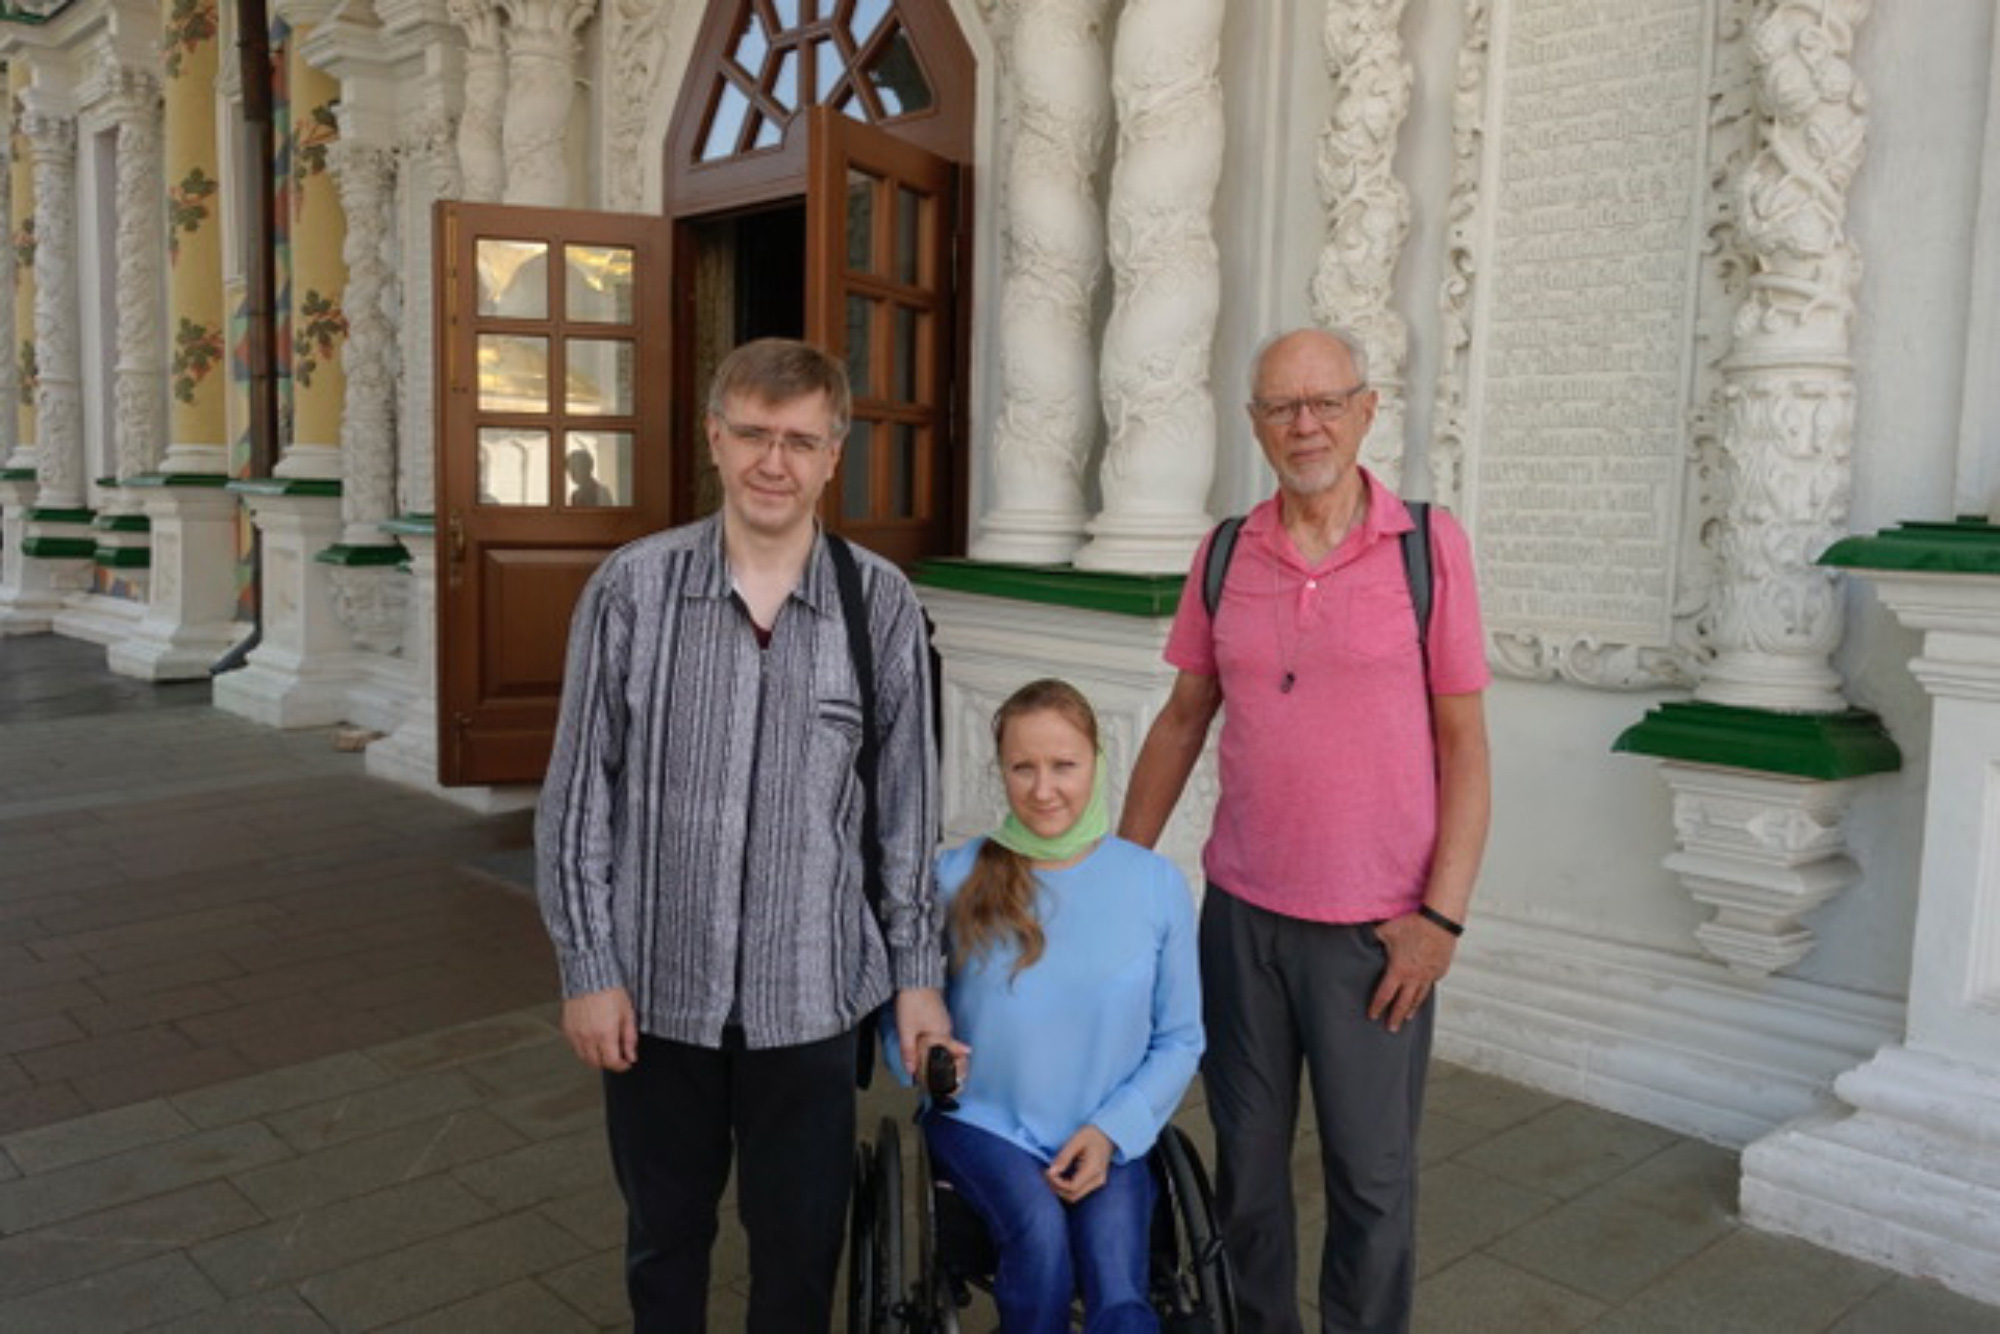 Retired Professor ’Don Klingberg, Jr., right, with friends in Russia